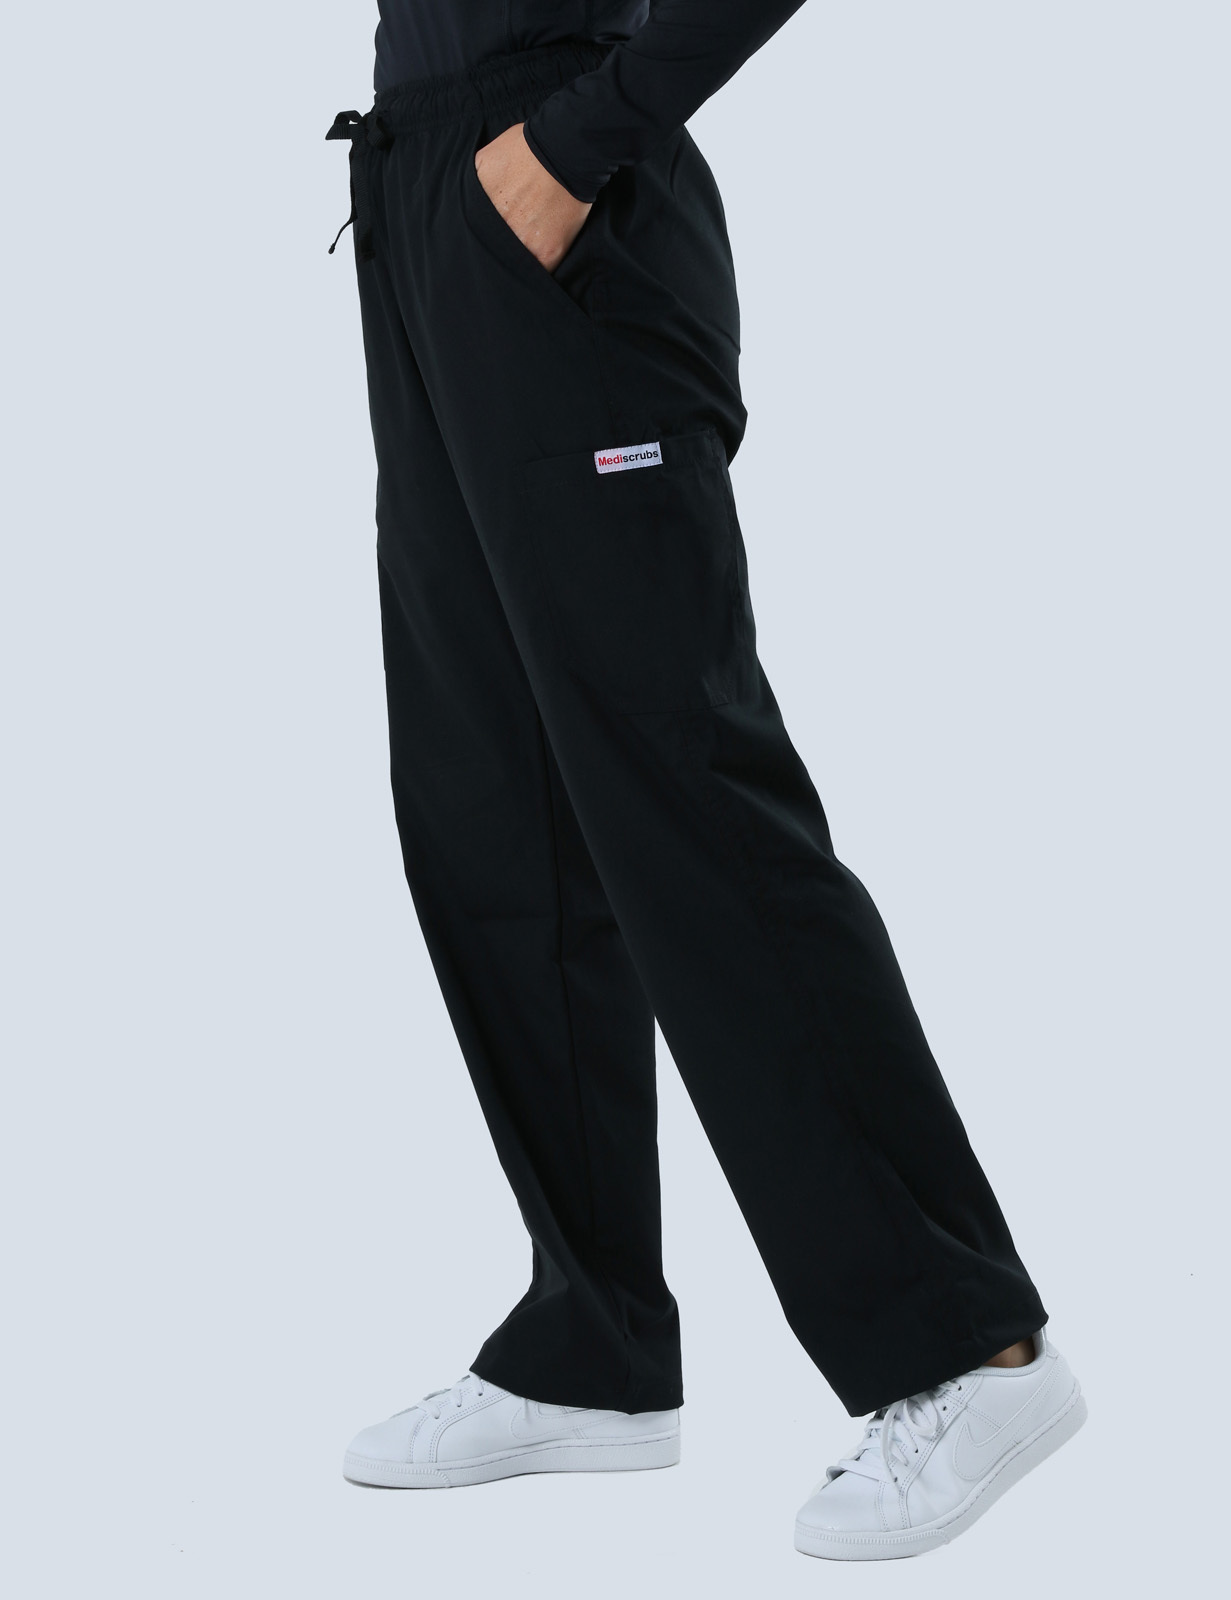 Women's Cargo Performance Pants - Black - 3X Large - 0